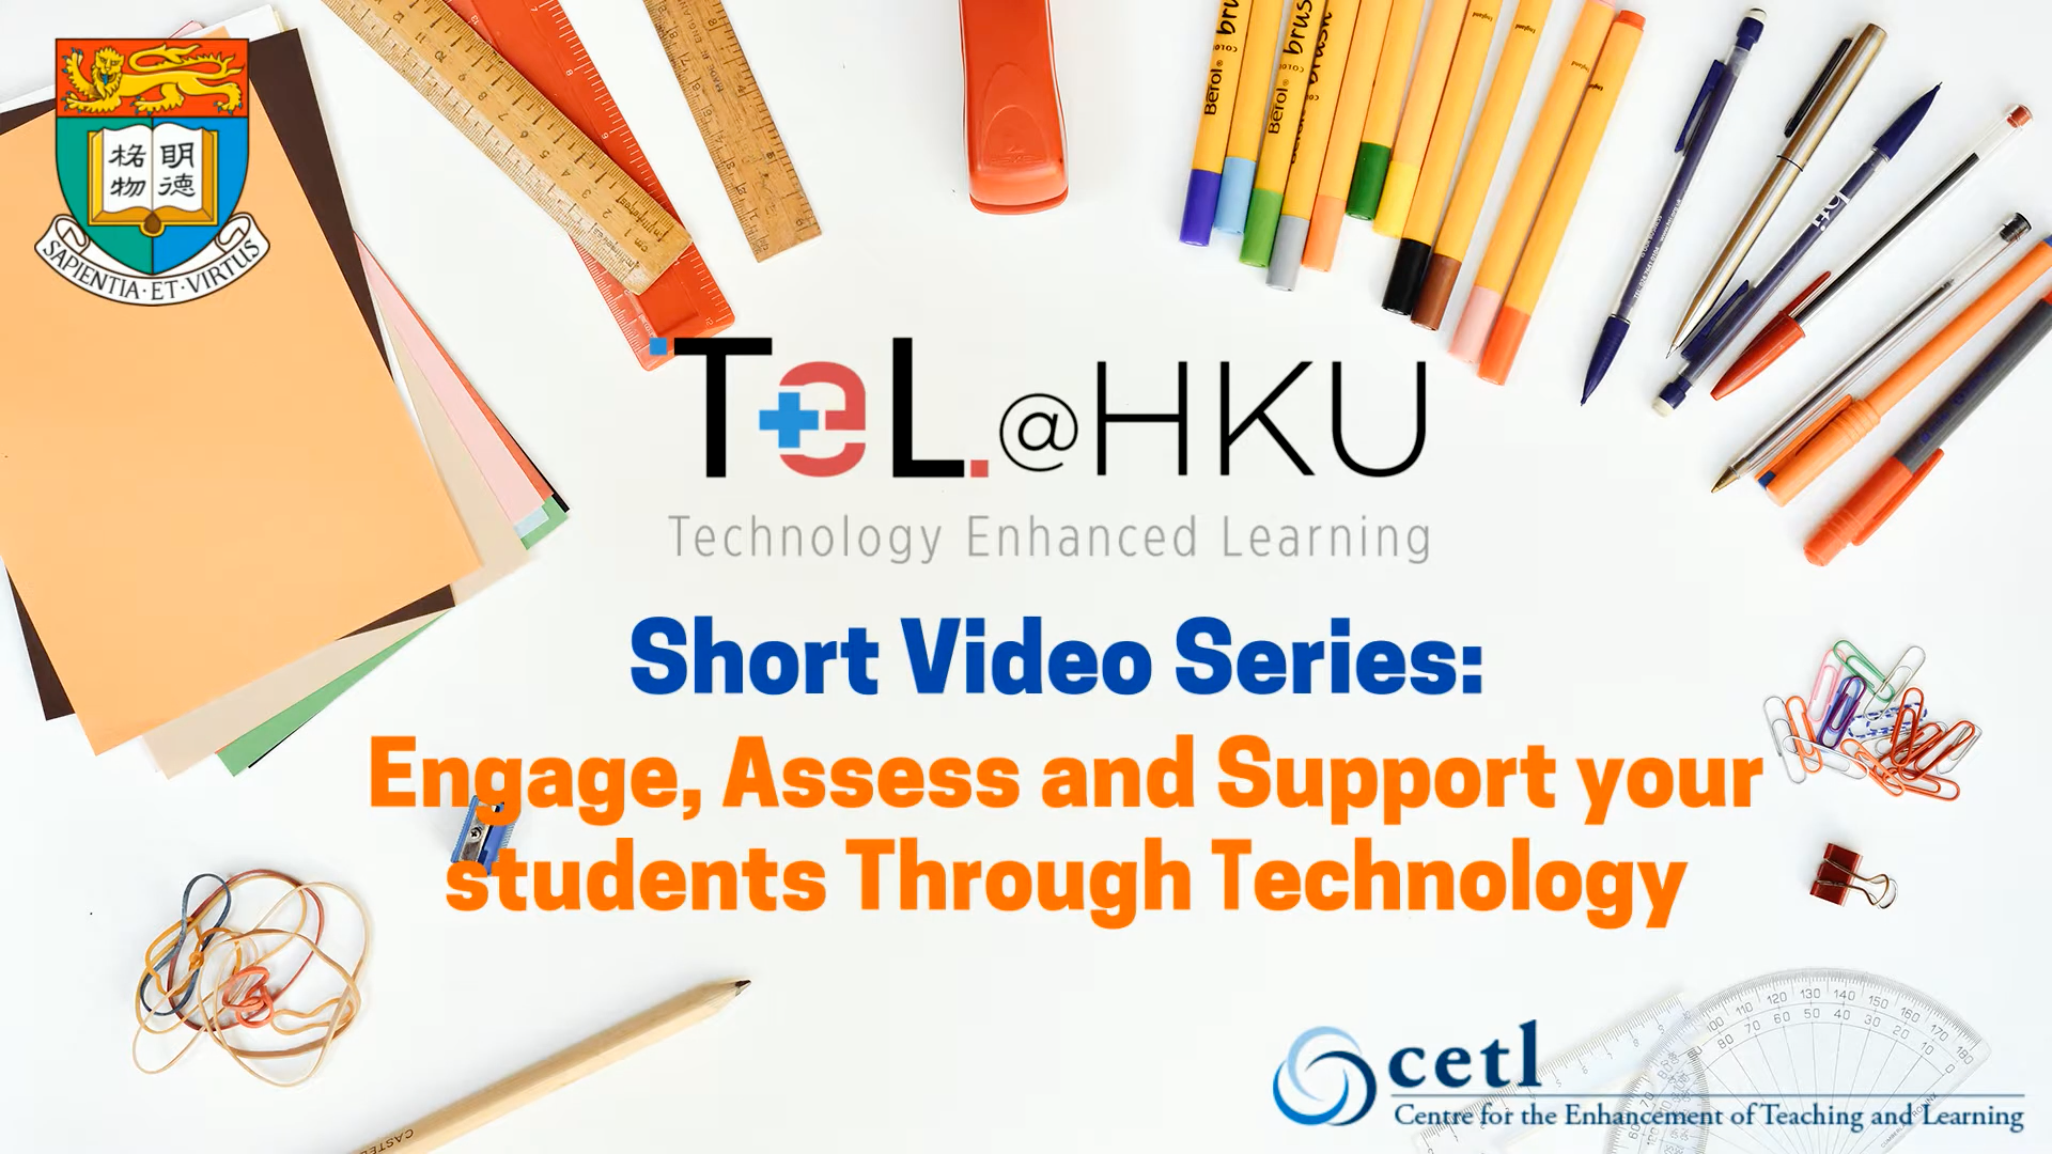 TeL@HKU Short Video Series Introduction